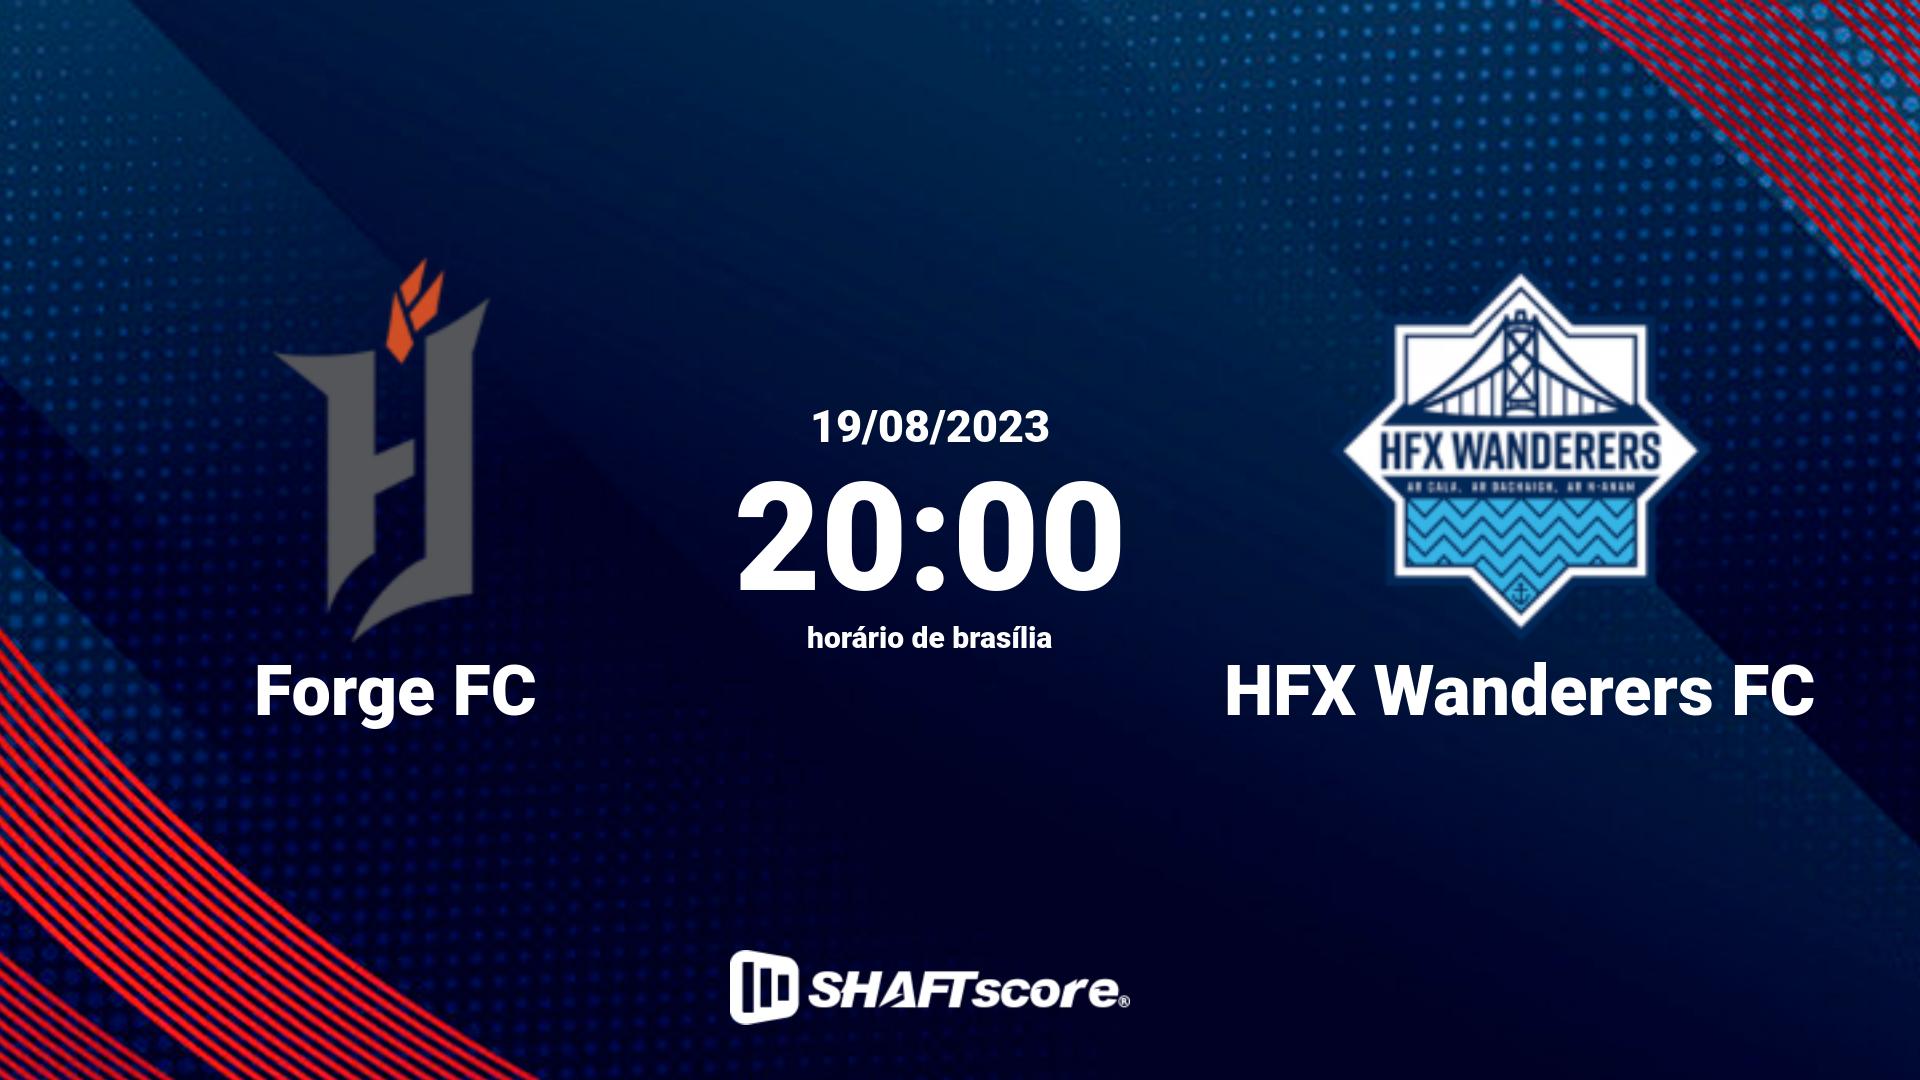 Estatísticas do jogo Forge FC vs HFX Wanderers FC 19.08 20:00